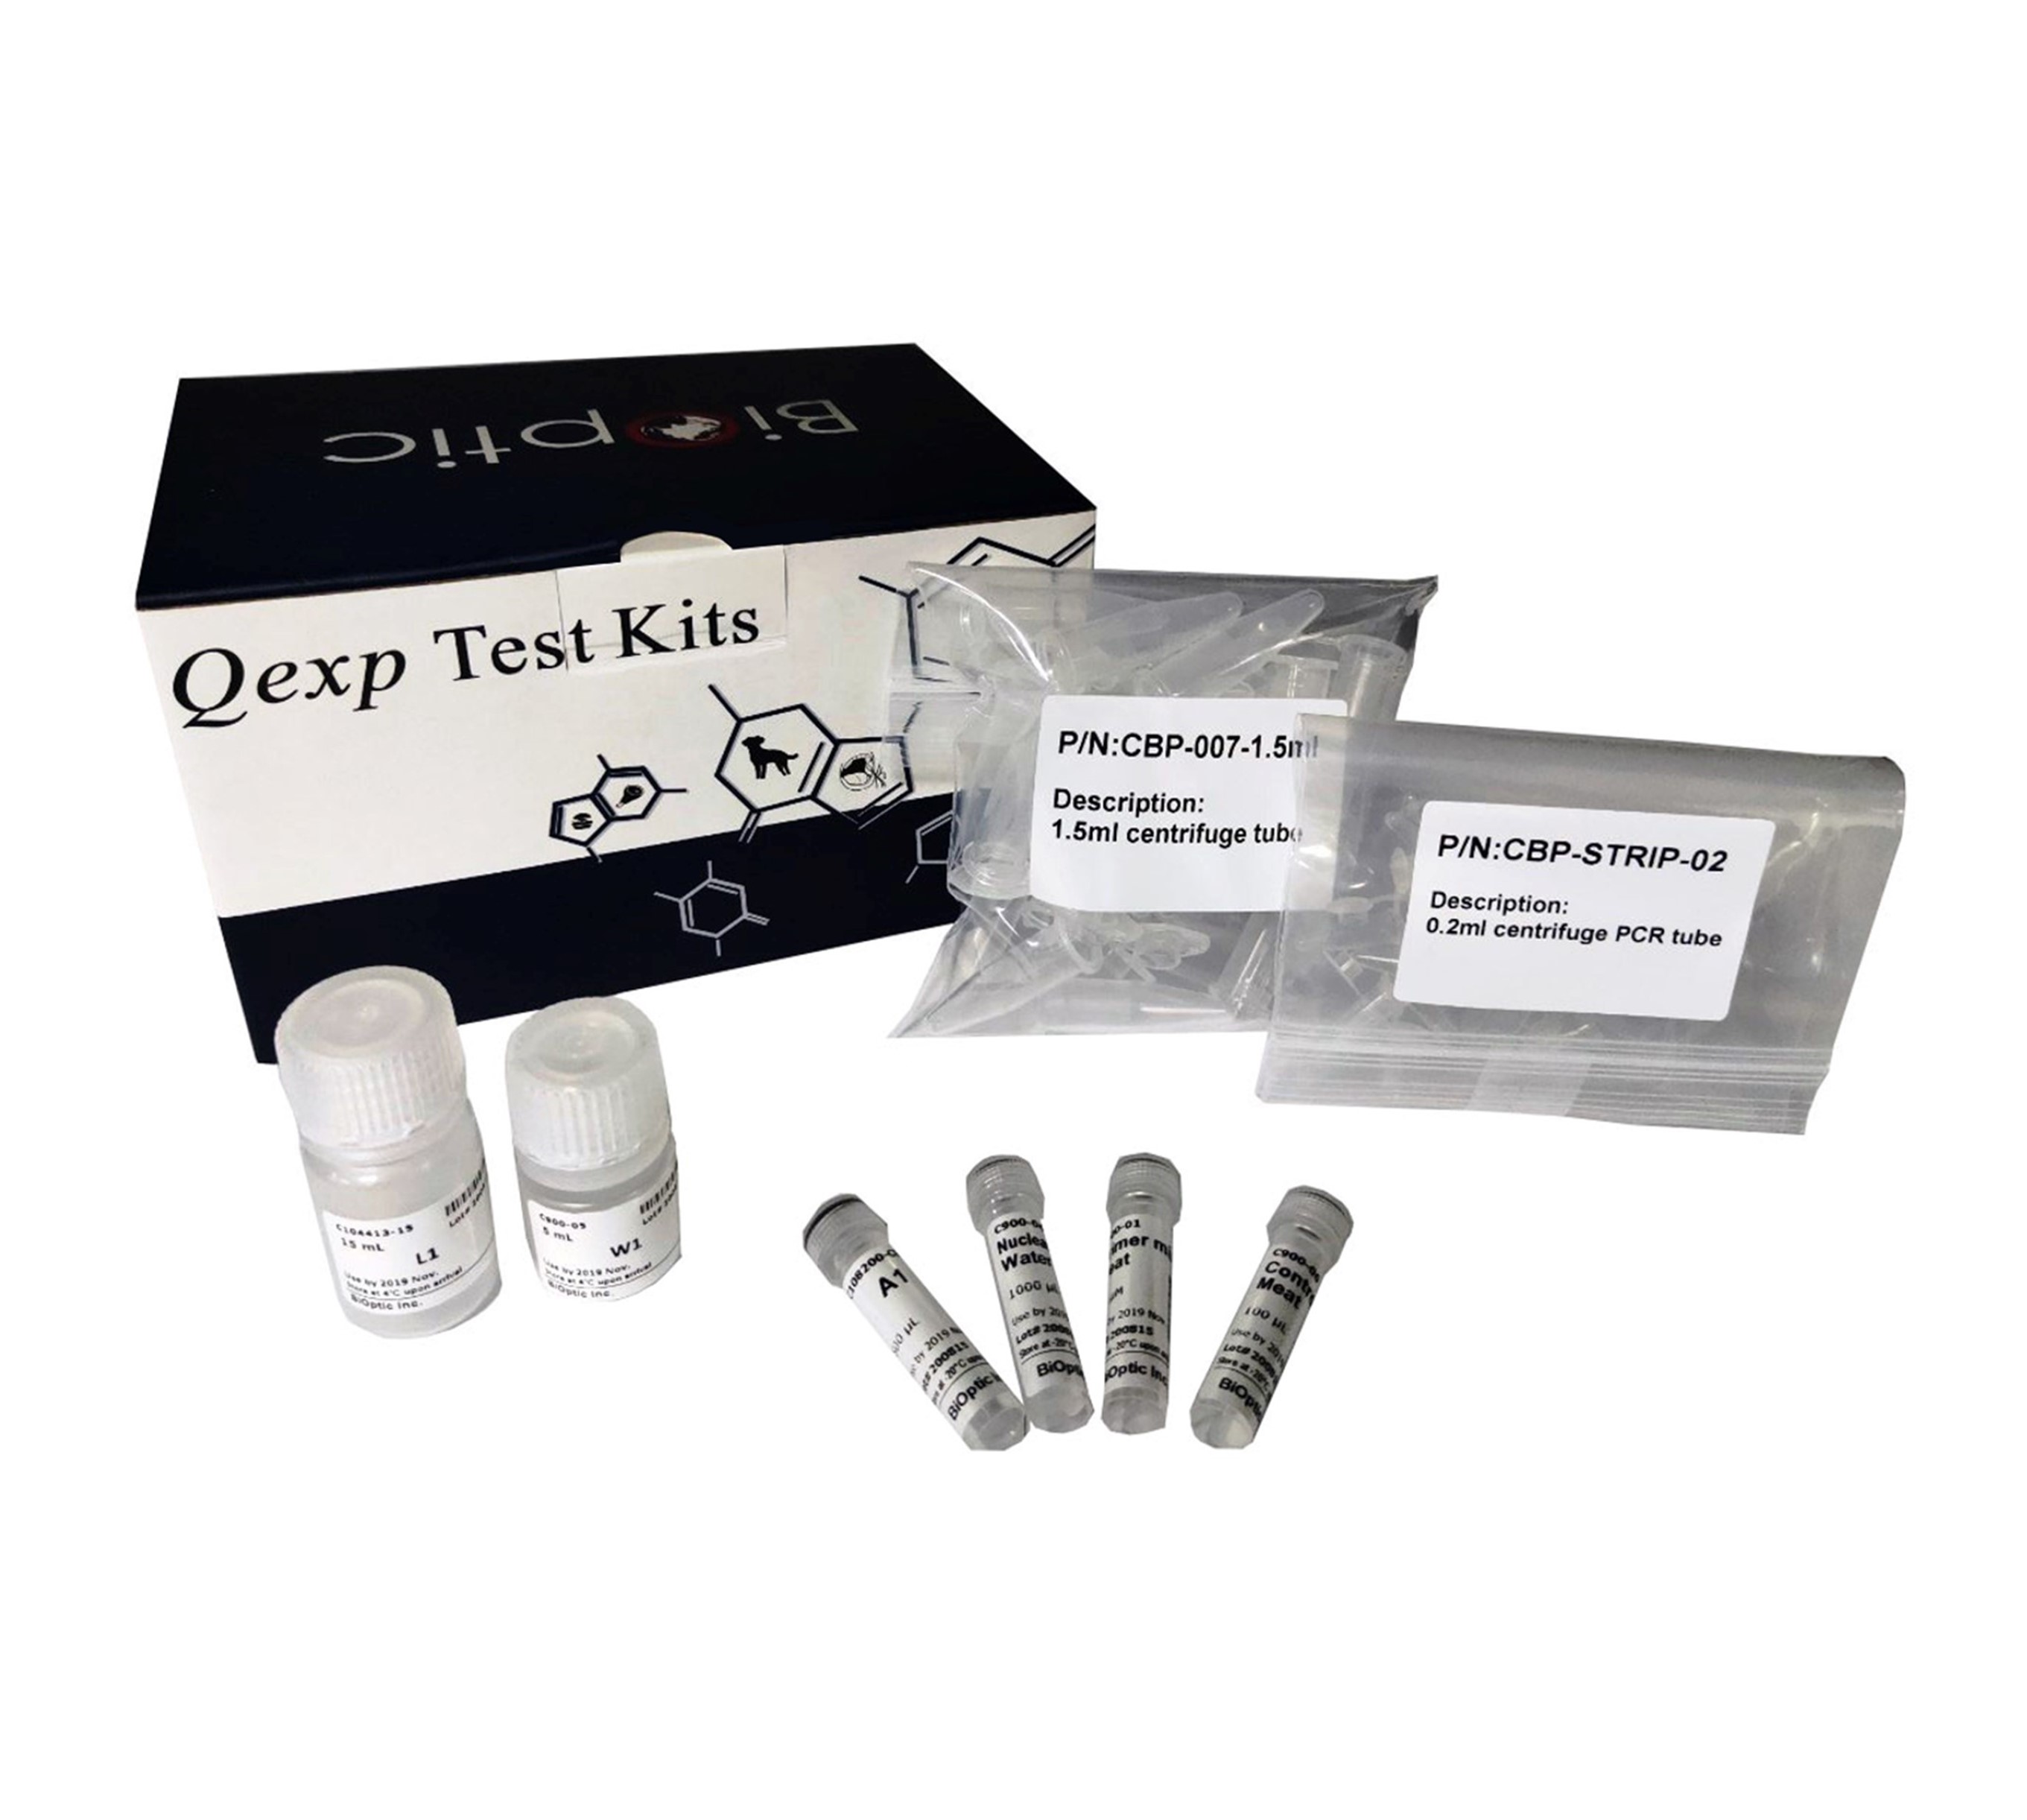 Qexp Test Kits